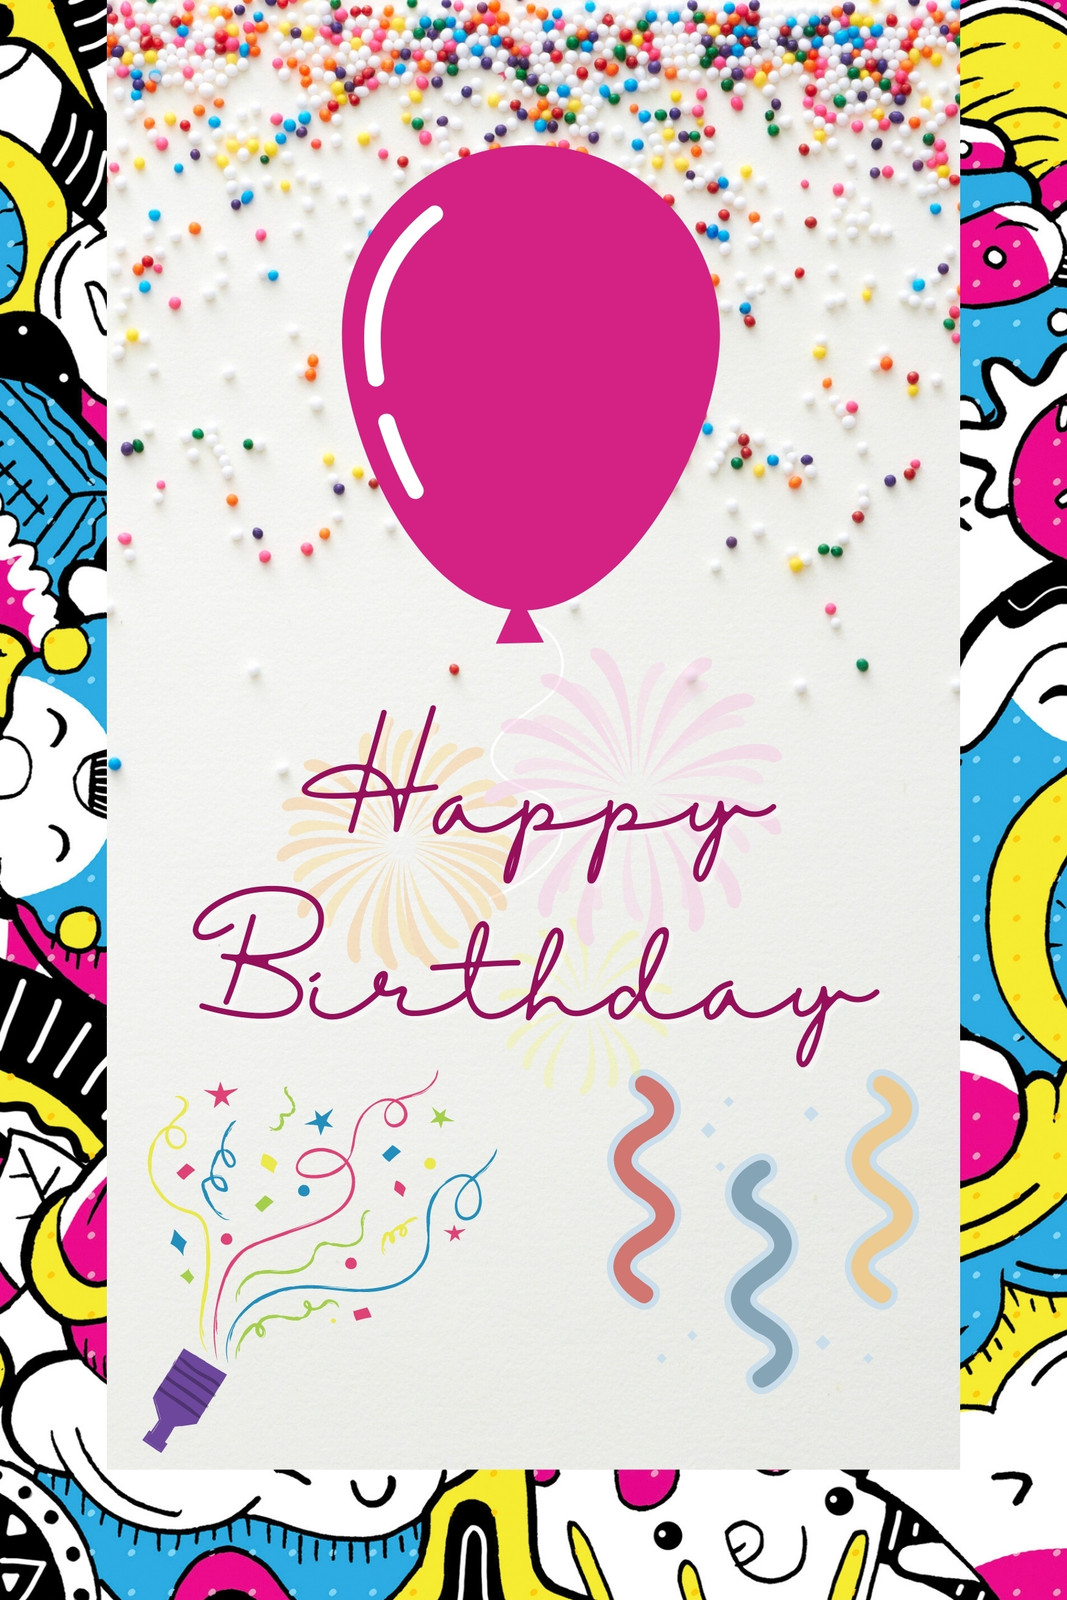 Page 4 - Free editable birthday Pinterest pin templates | Canva